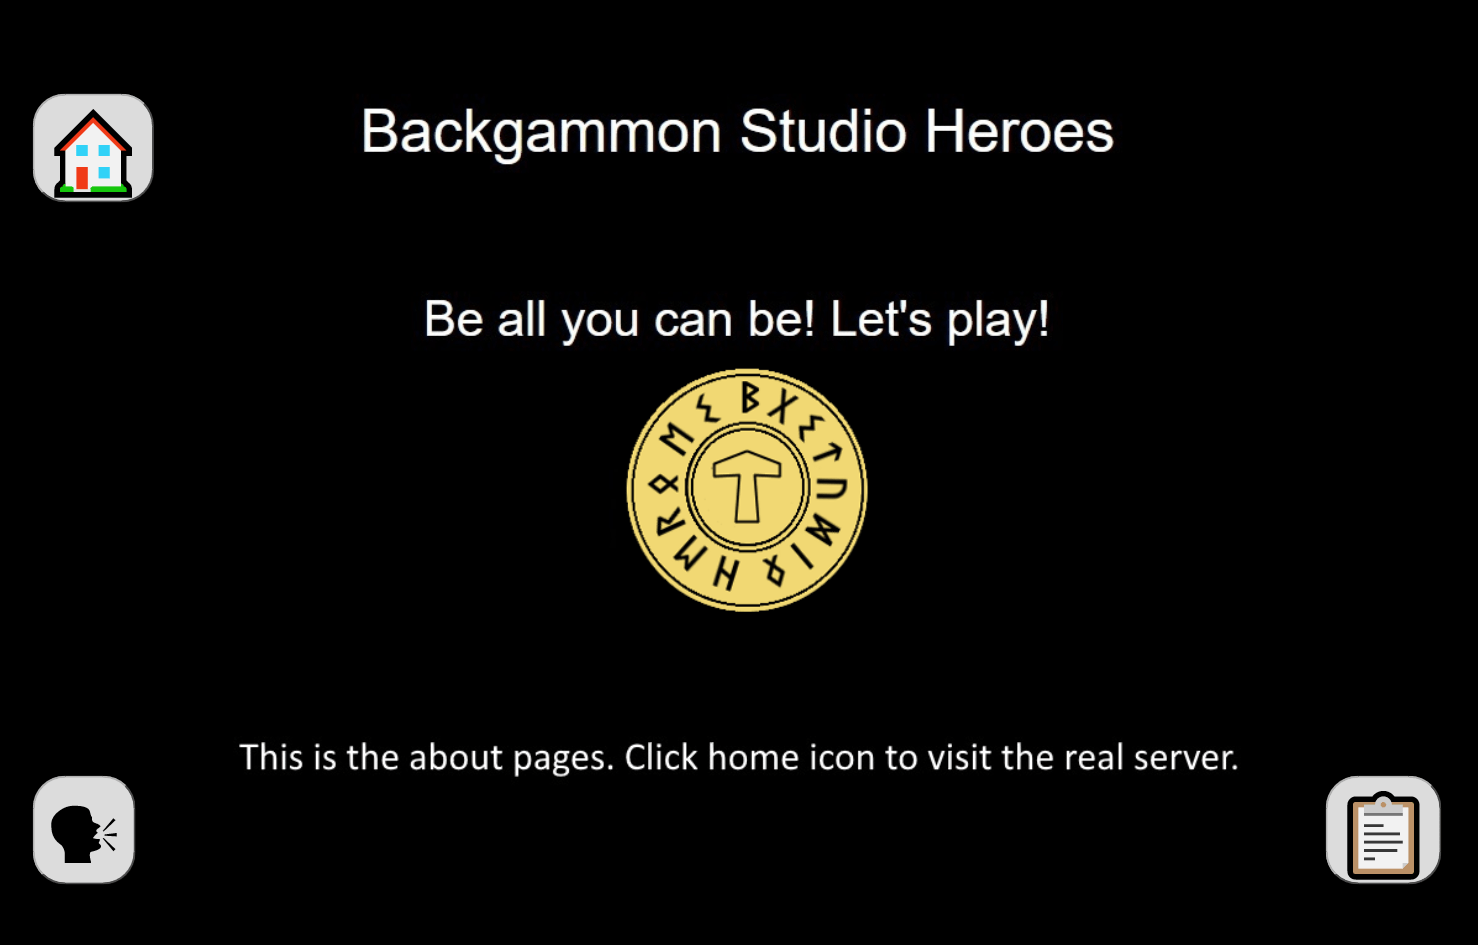 Backgammon Studio Heroes Review - Backgammon Rules